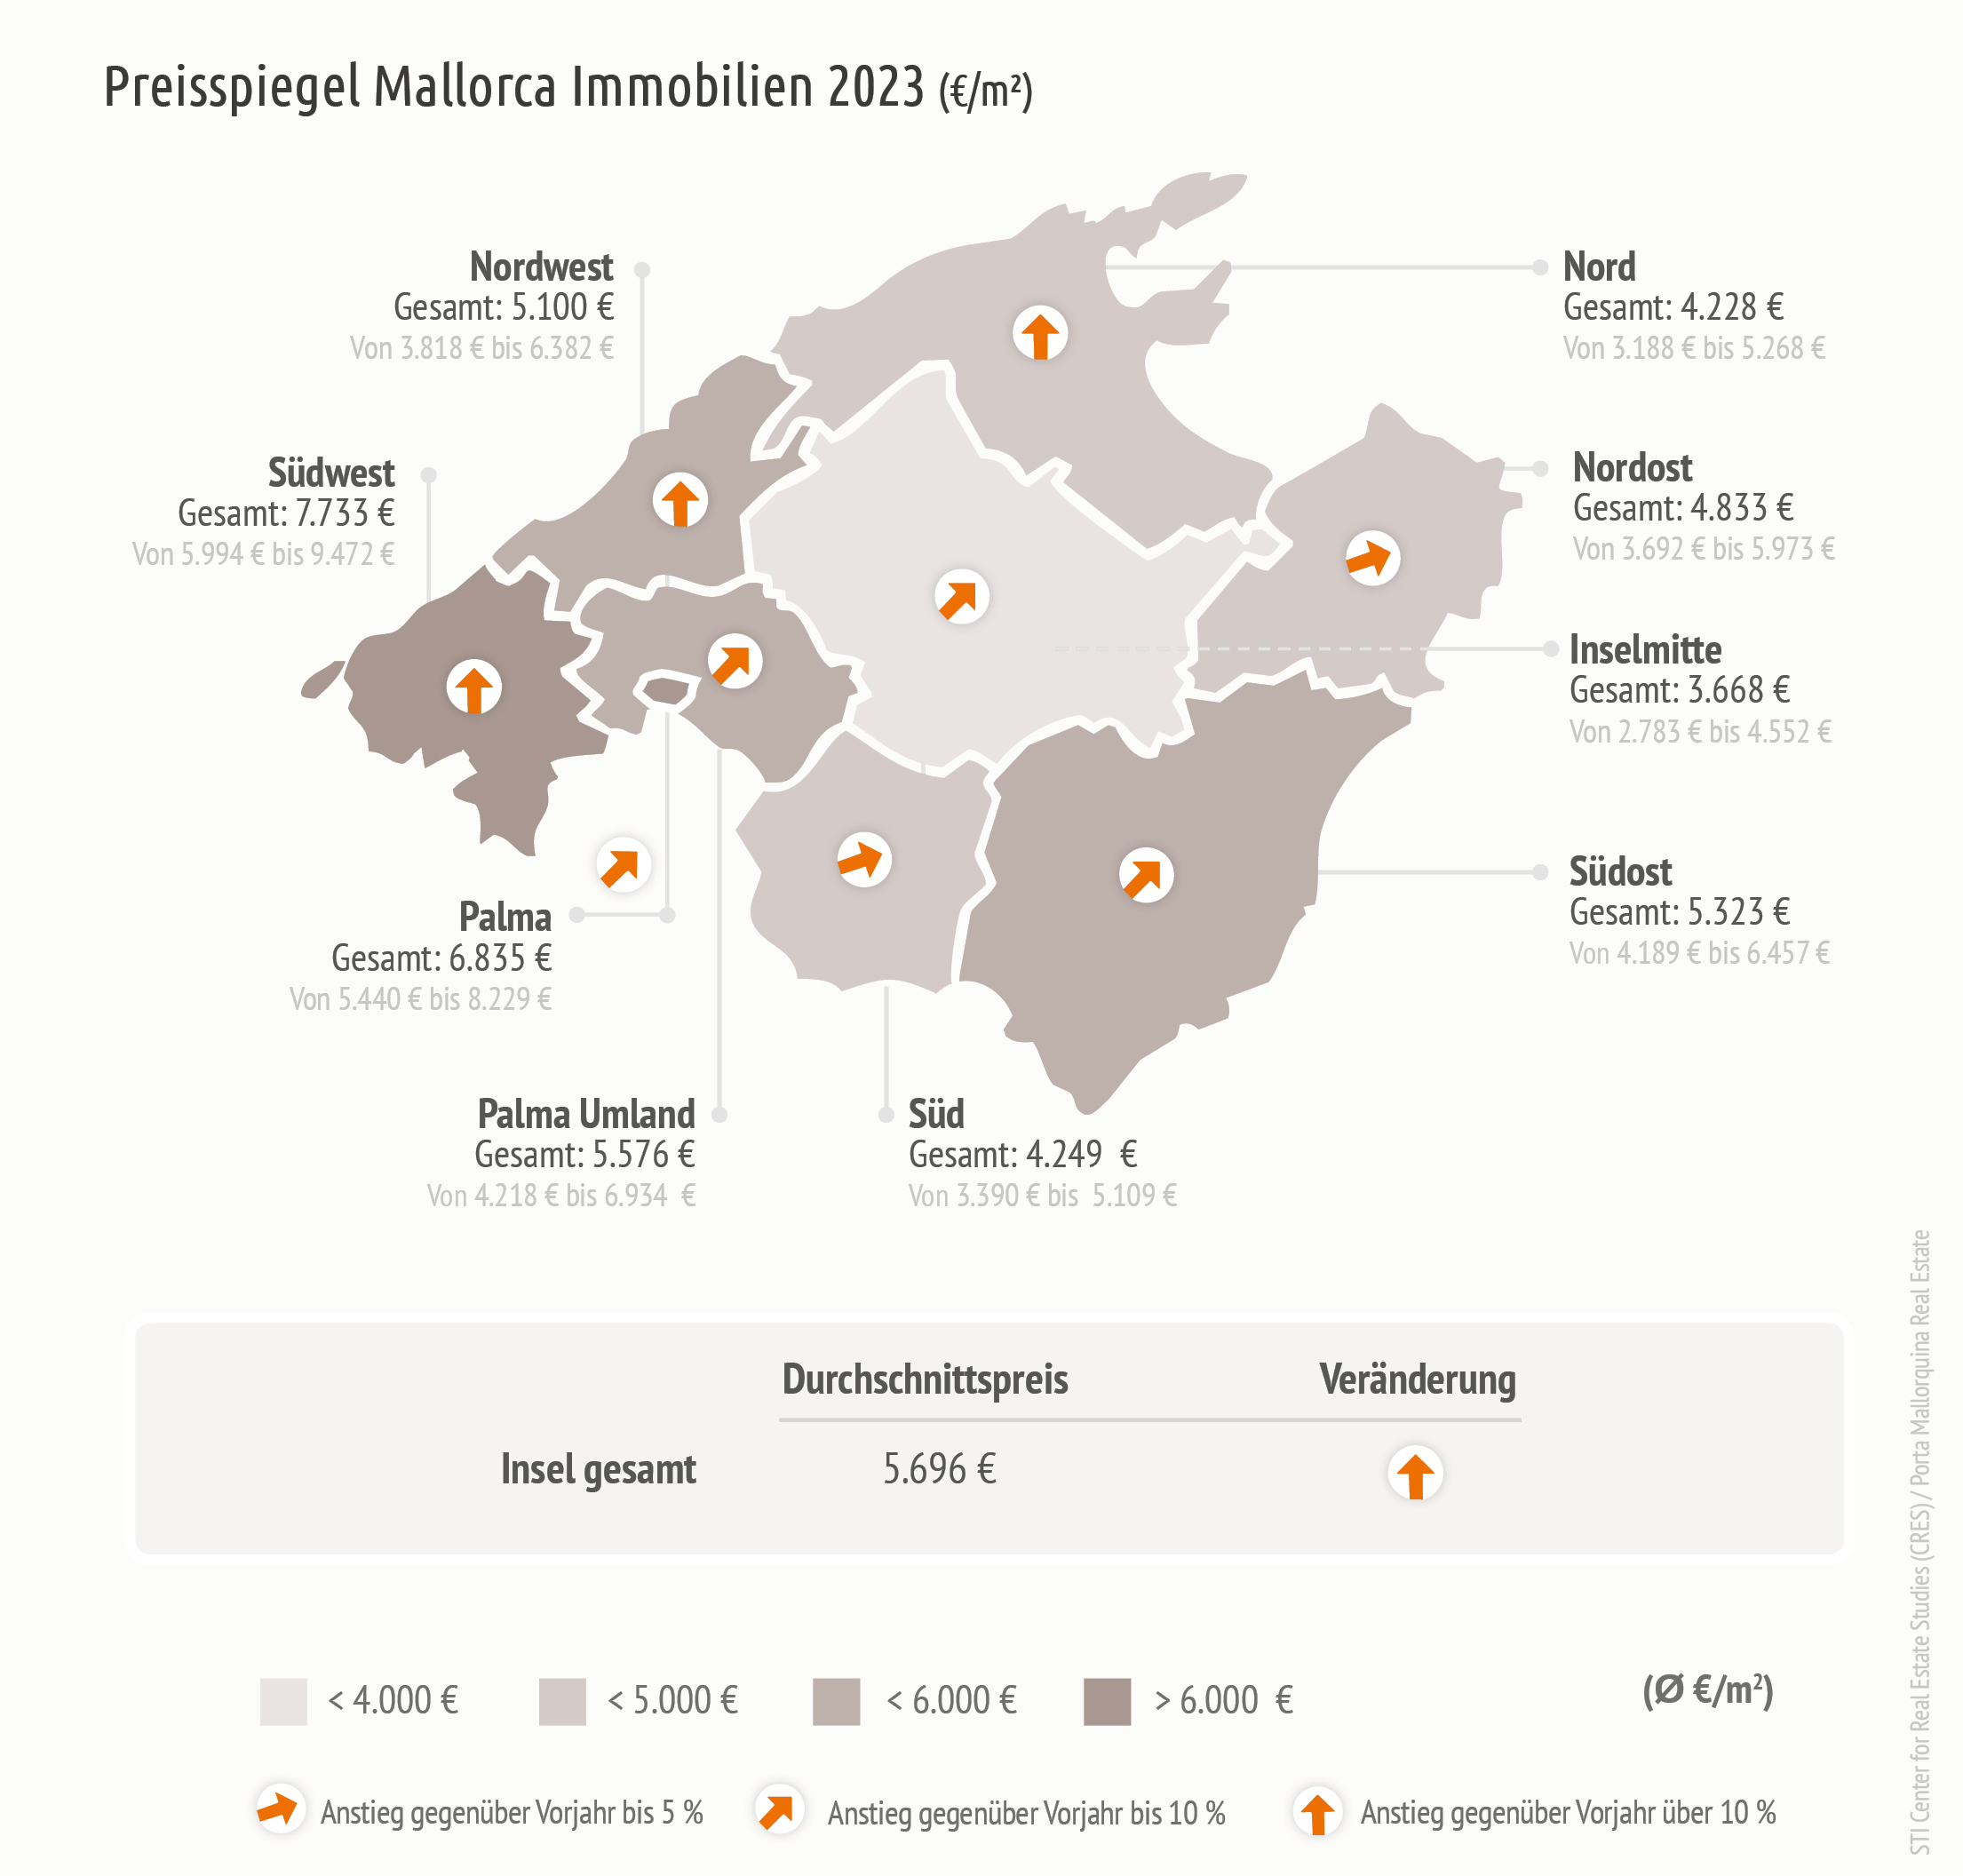 Preisspiegel Mallorca Immobilien 2023